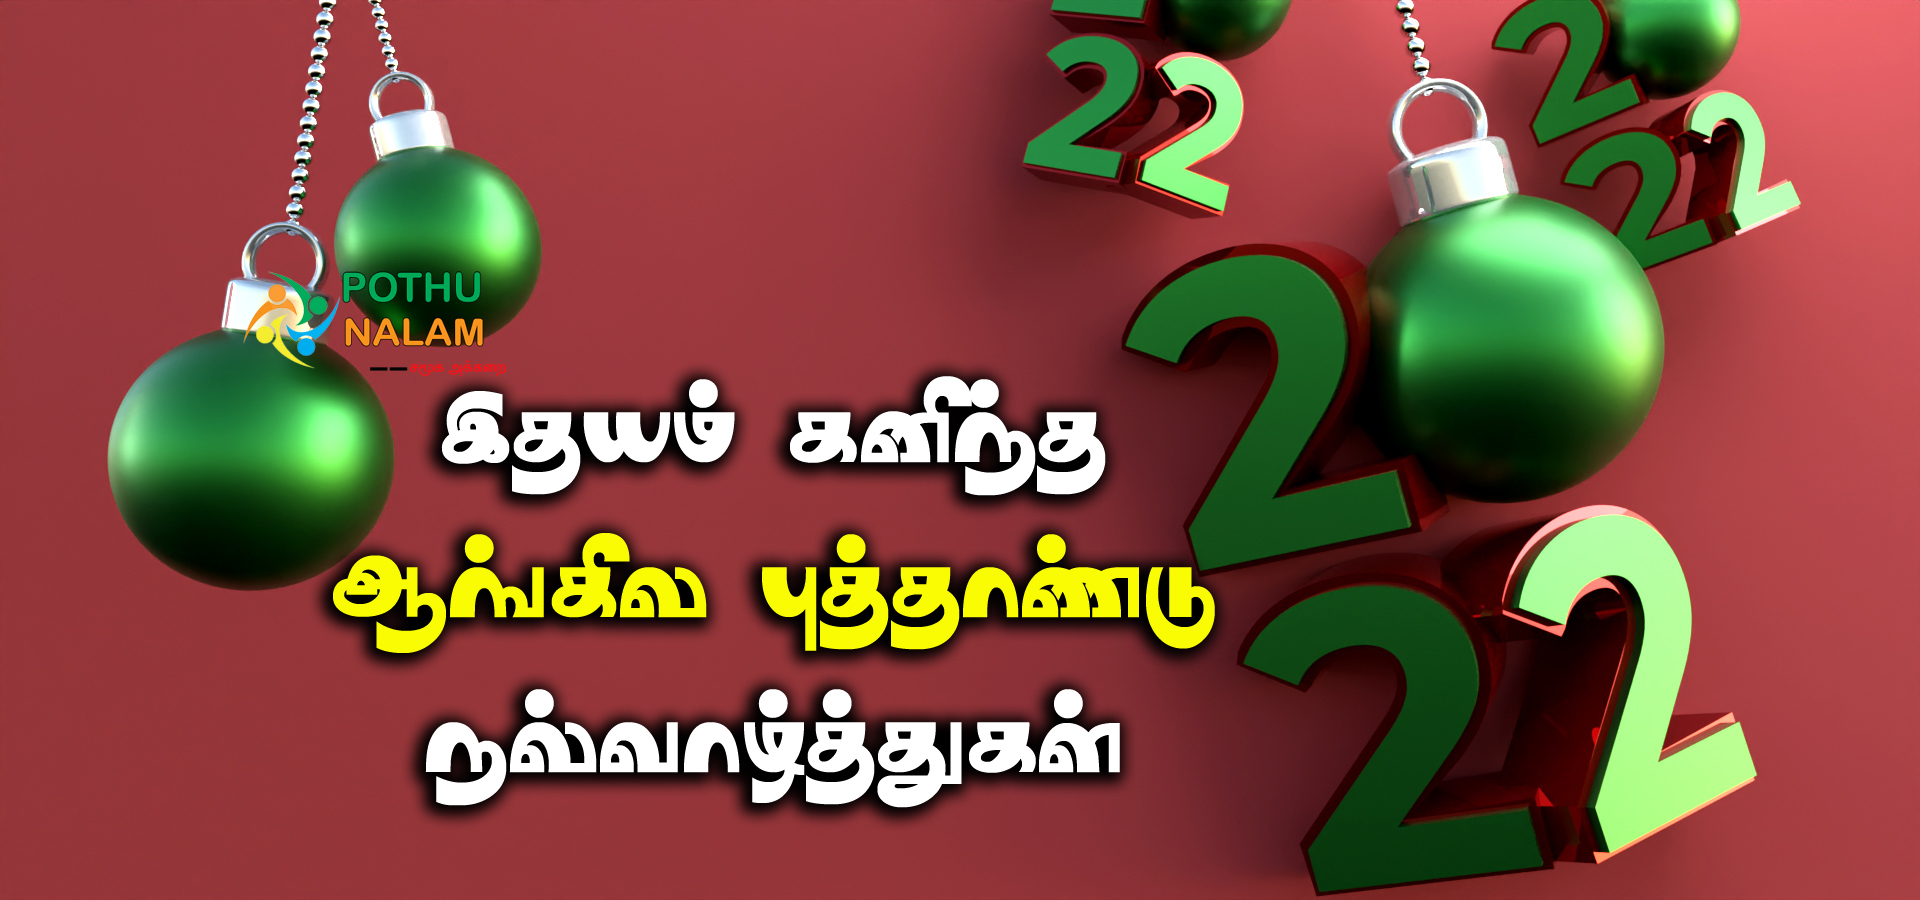 new year wishes 2022 tamil kavithai